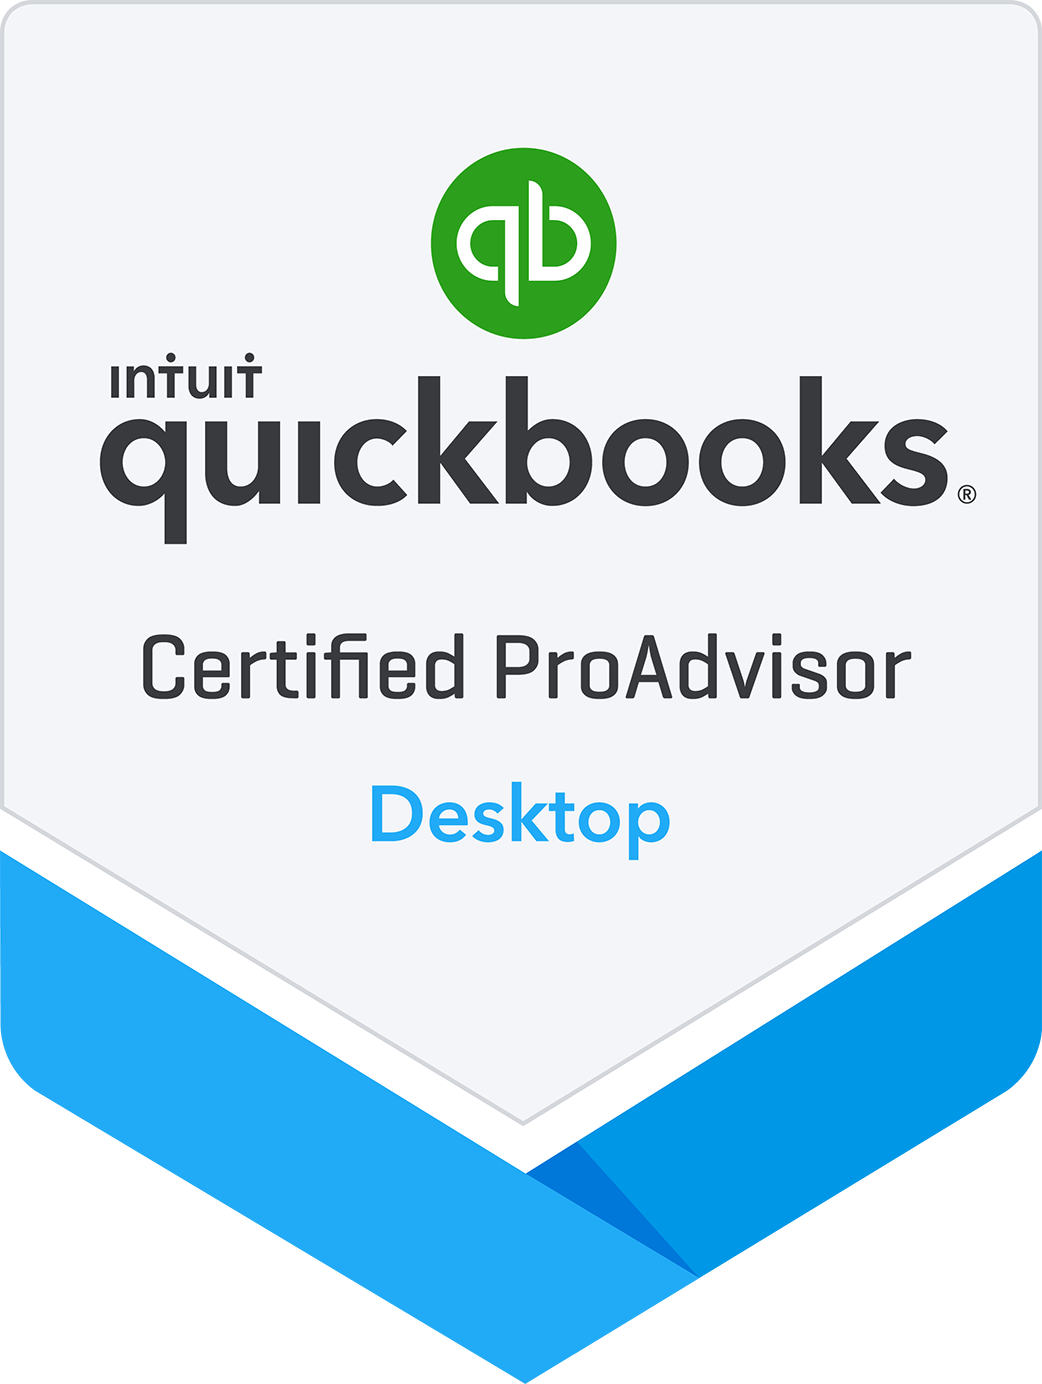 QuickBooks Proadvisor Certification, Ocala, FL, Celebration, FL, The Villages, FL and surrounding cities